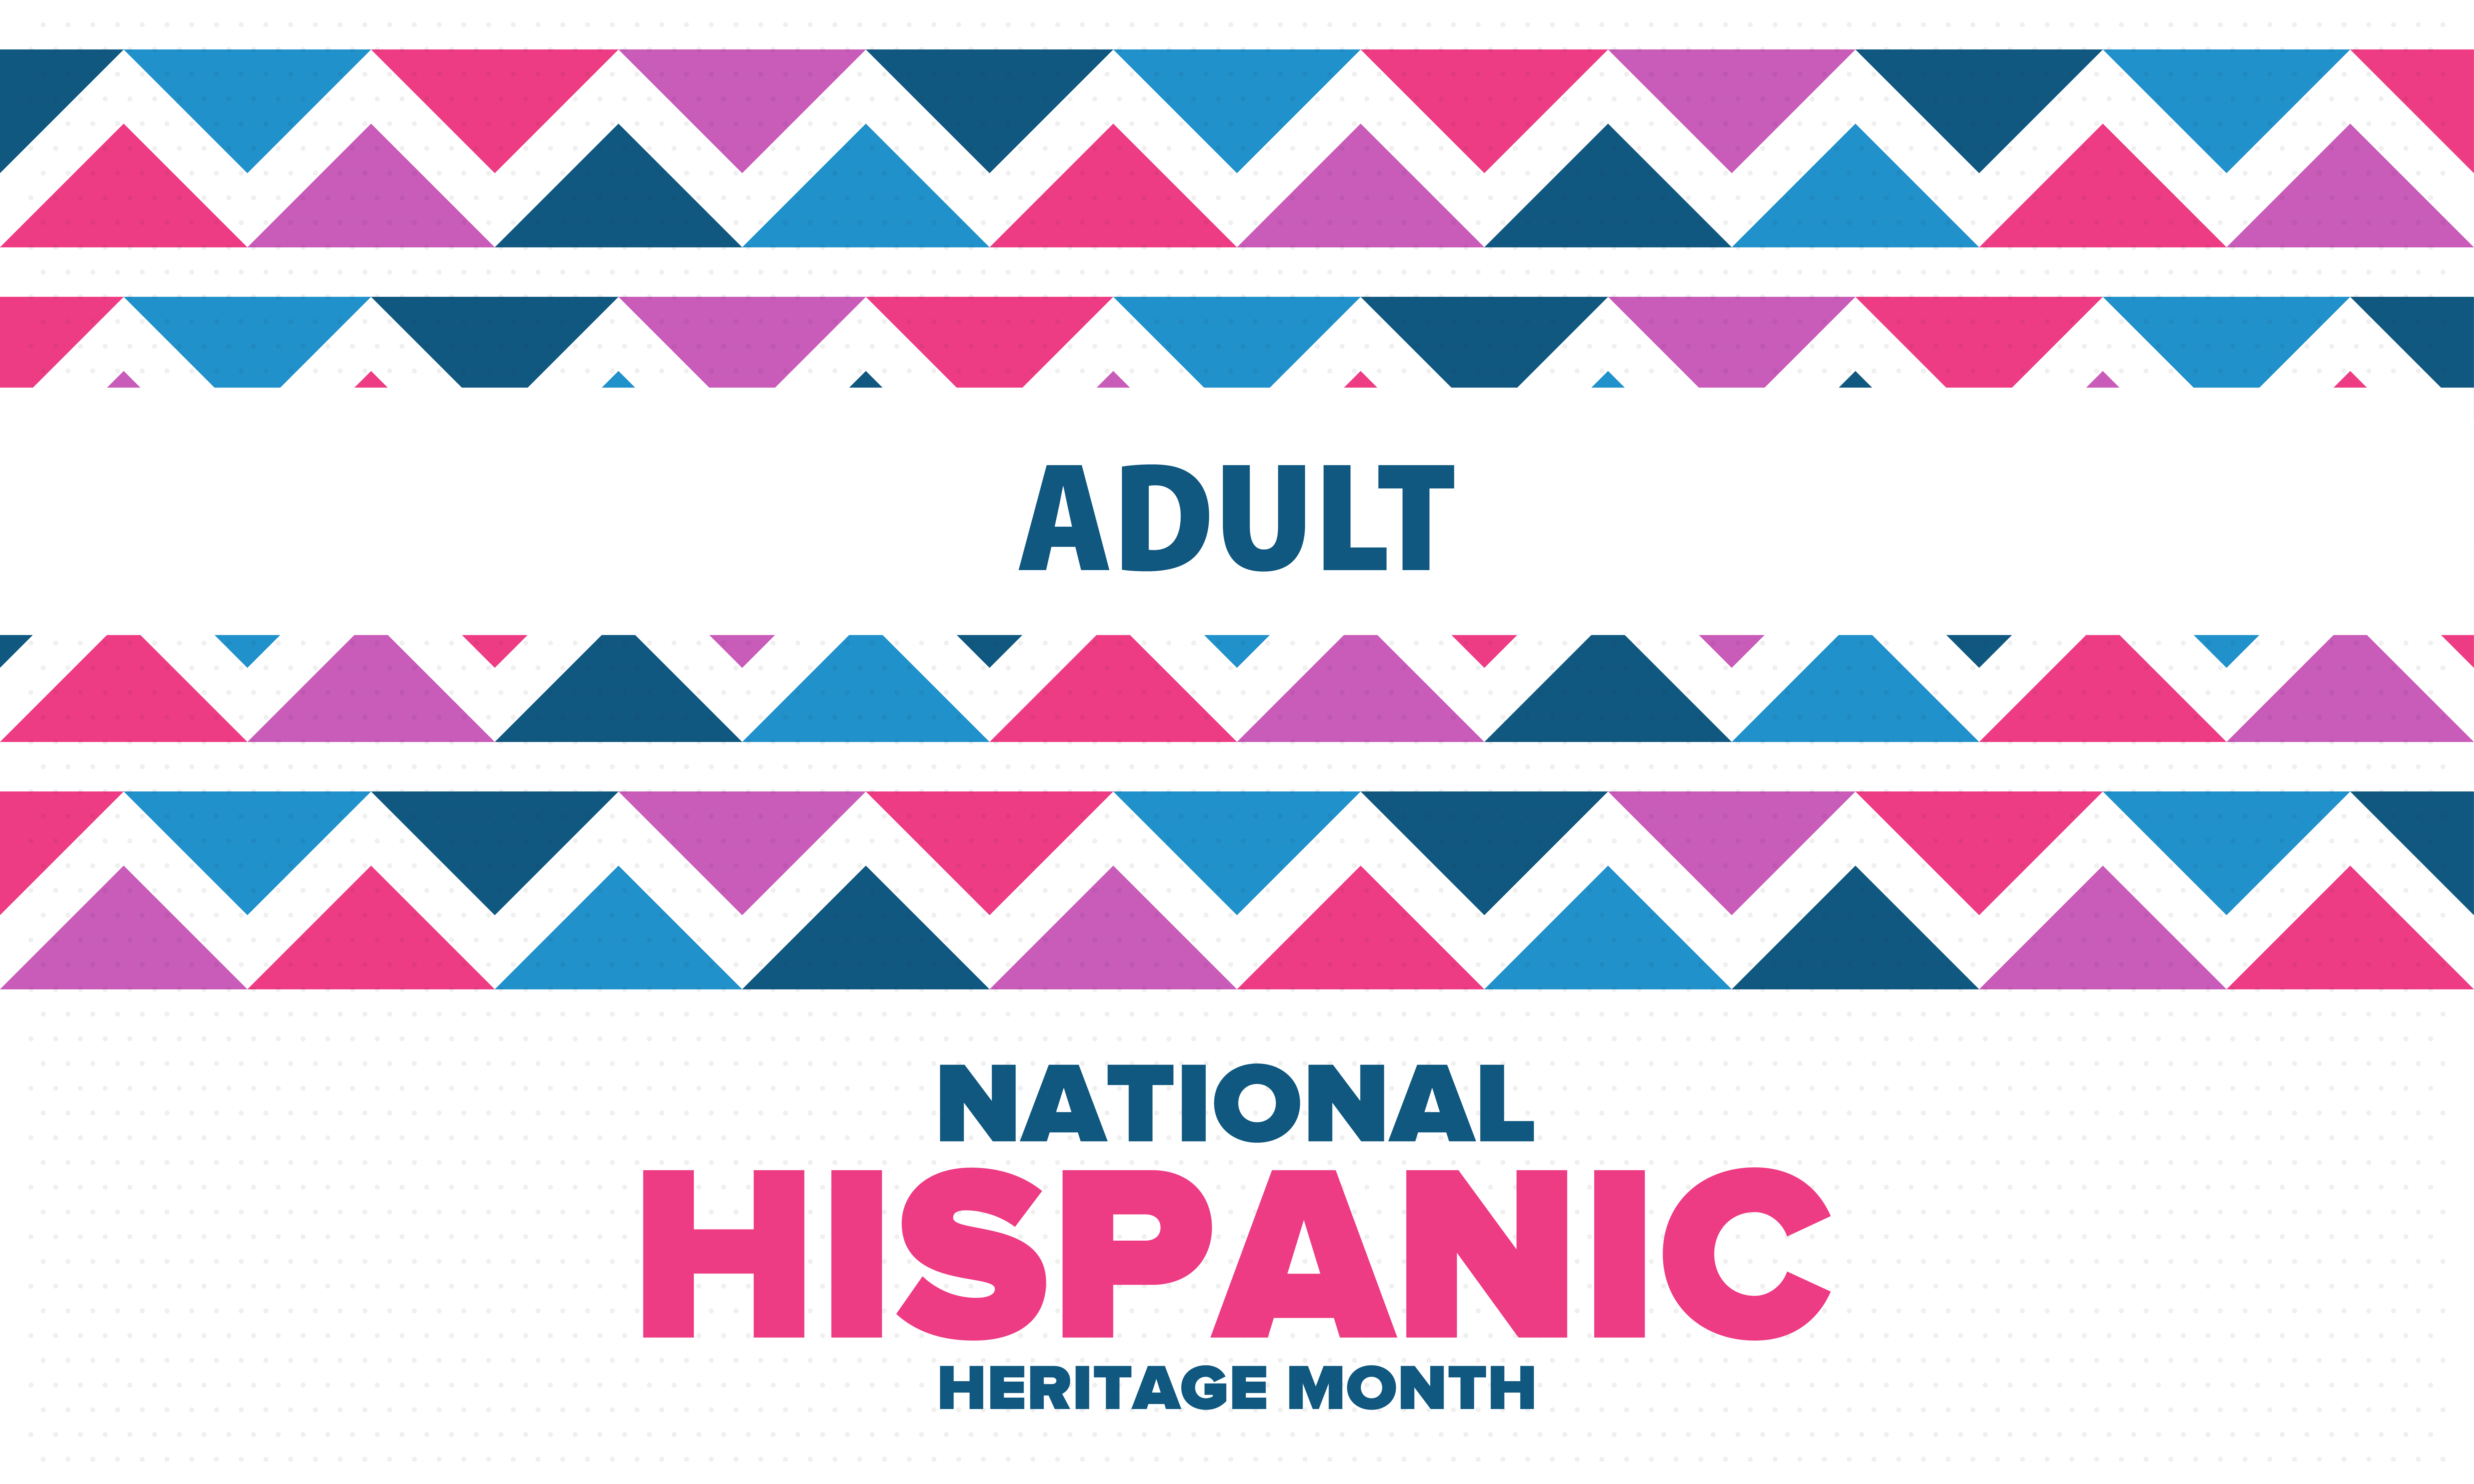 Hispanic Heritage Month: Adult